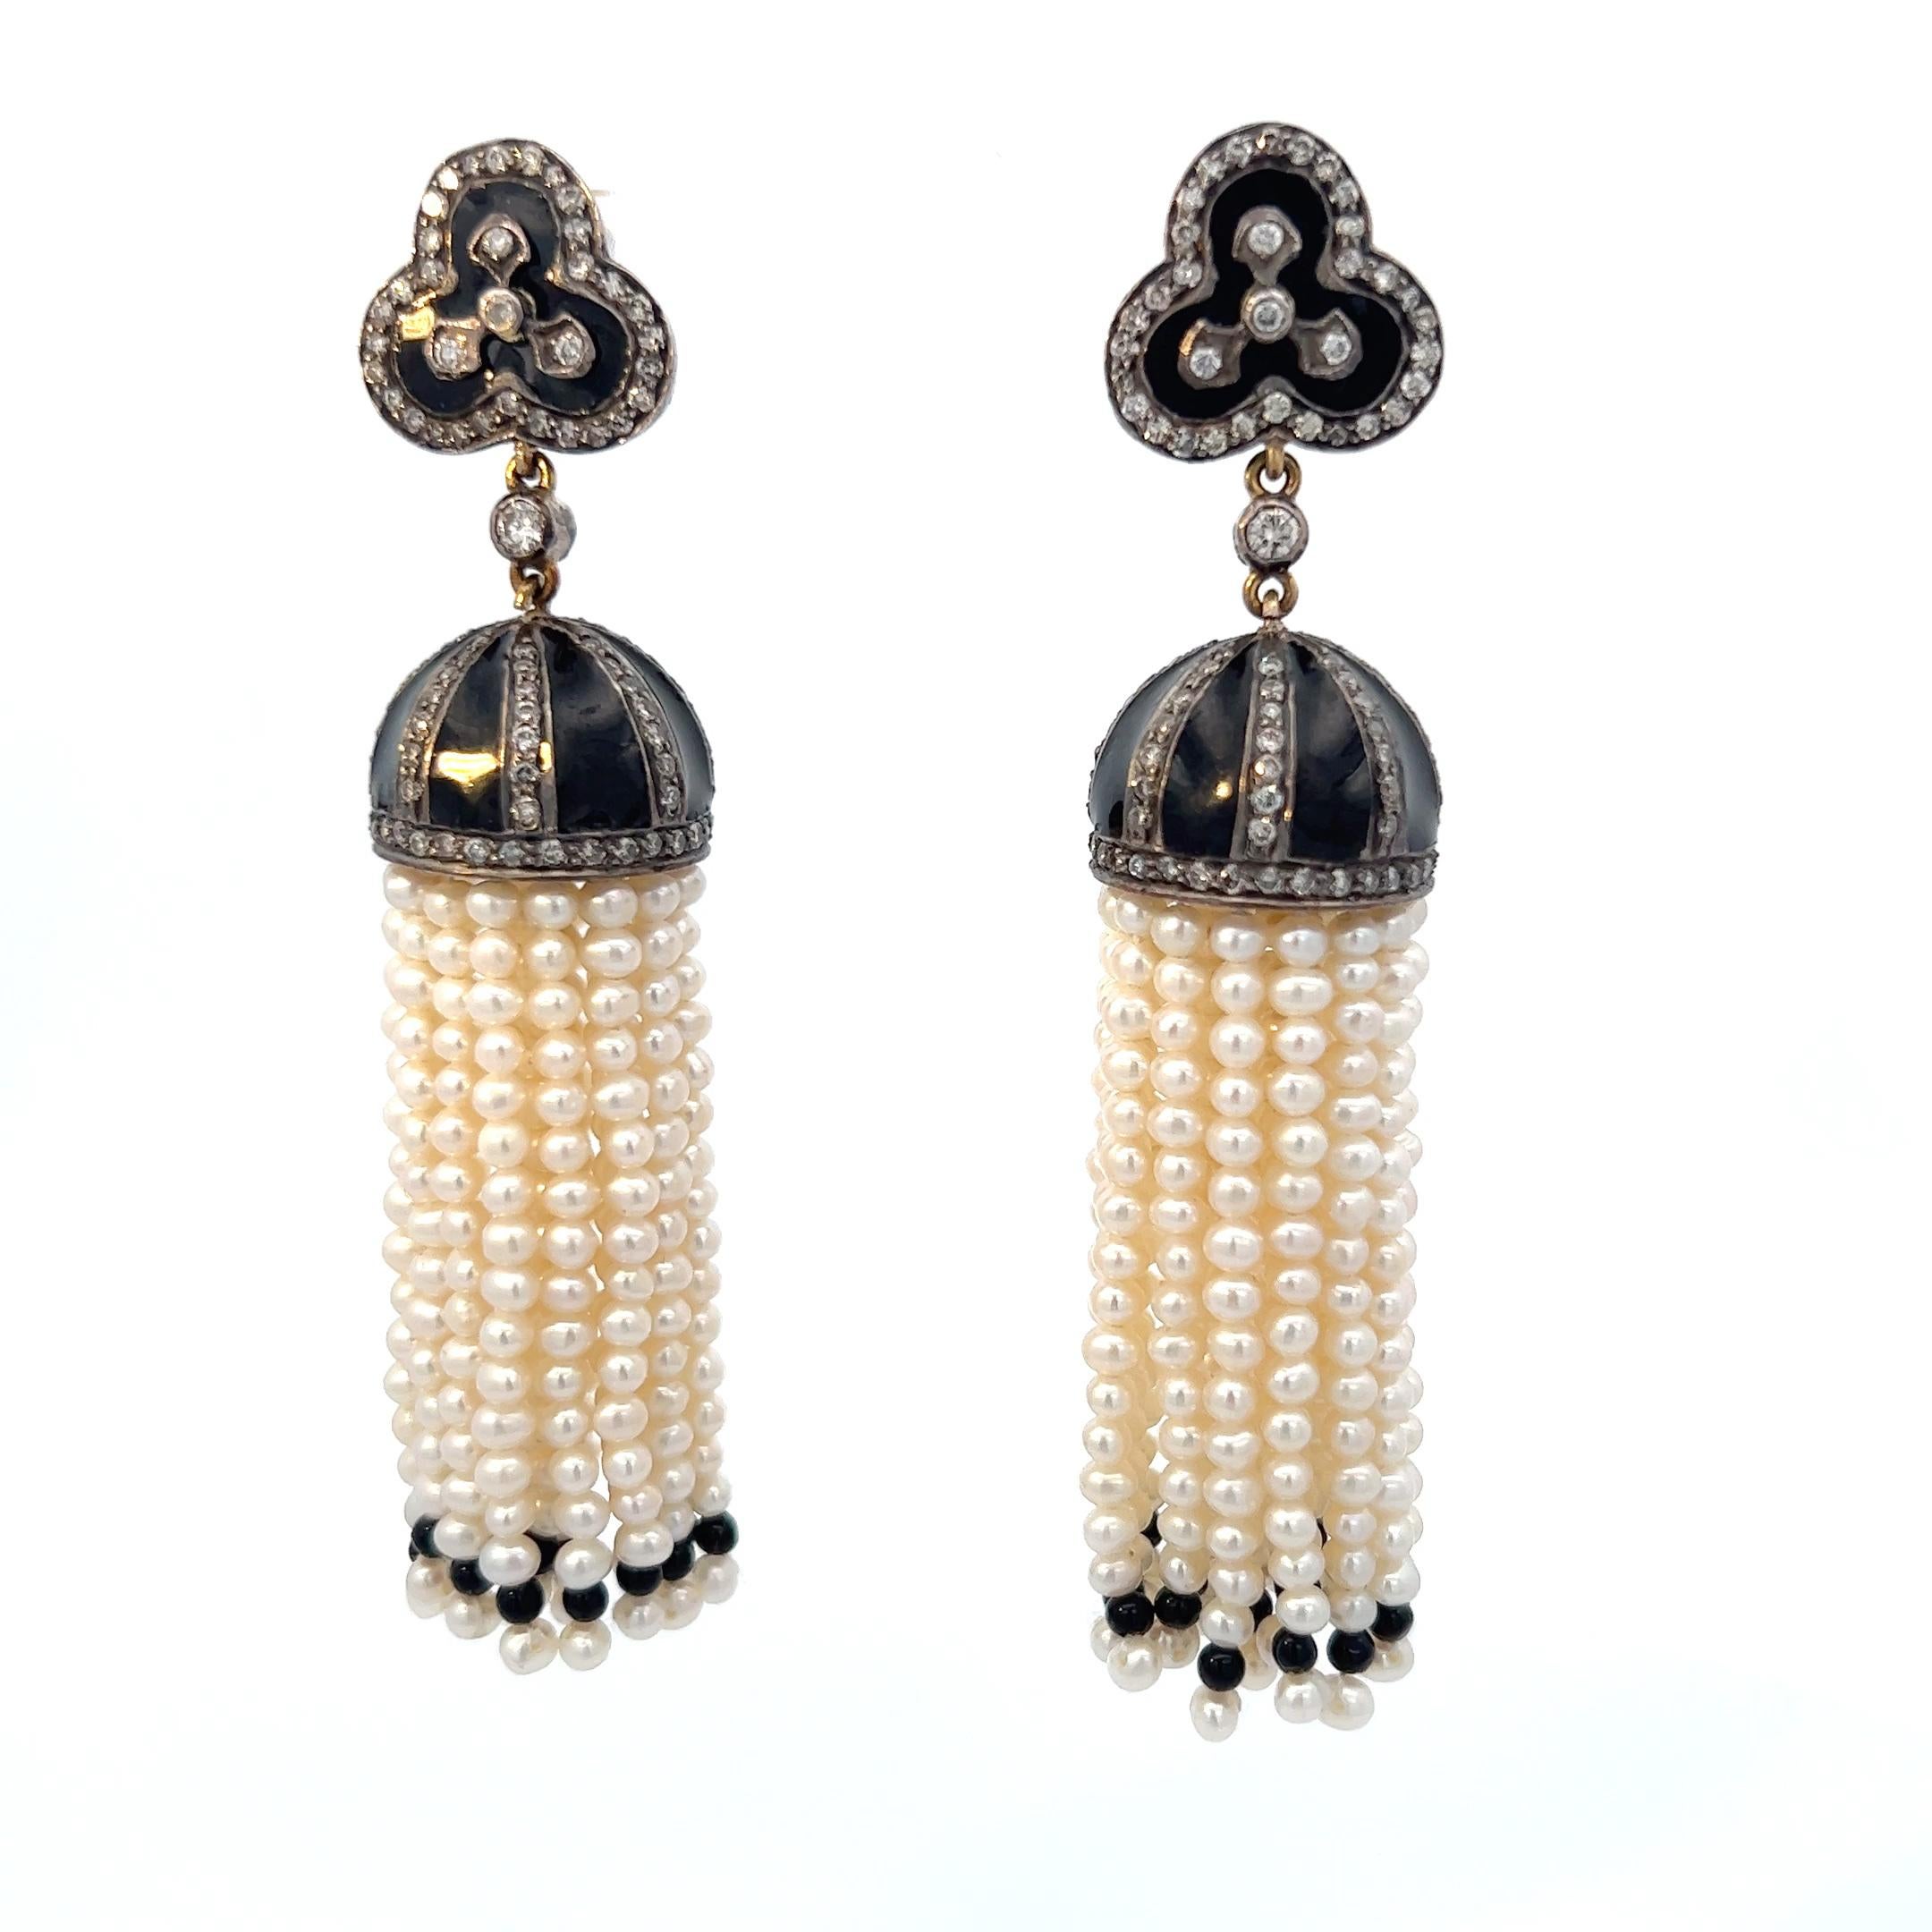 antique black onyx earrings